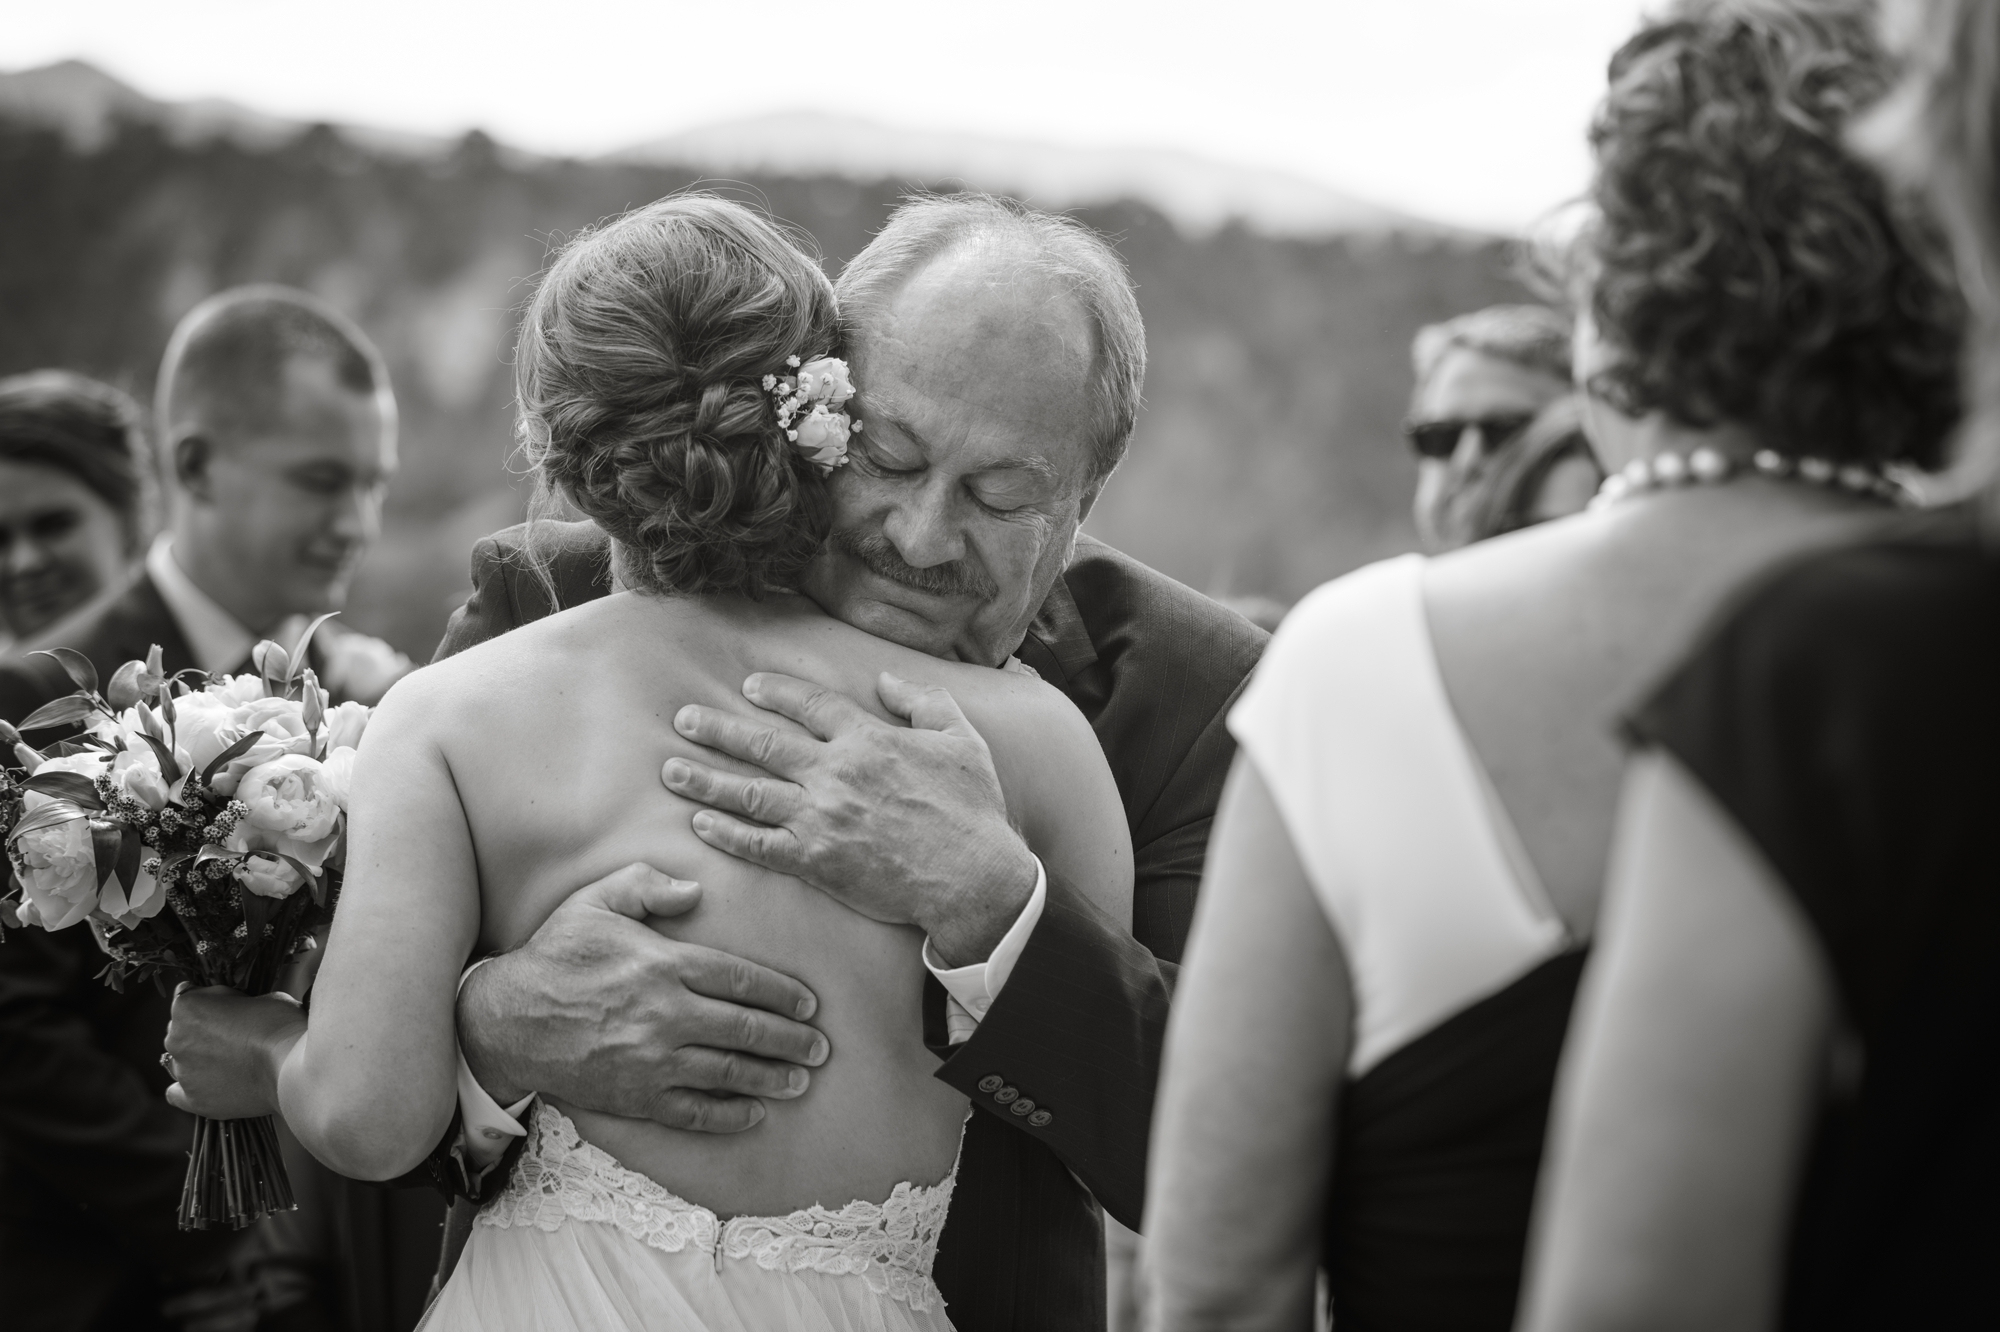 Father walks bride down aisle at Aspen wedding ceremony